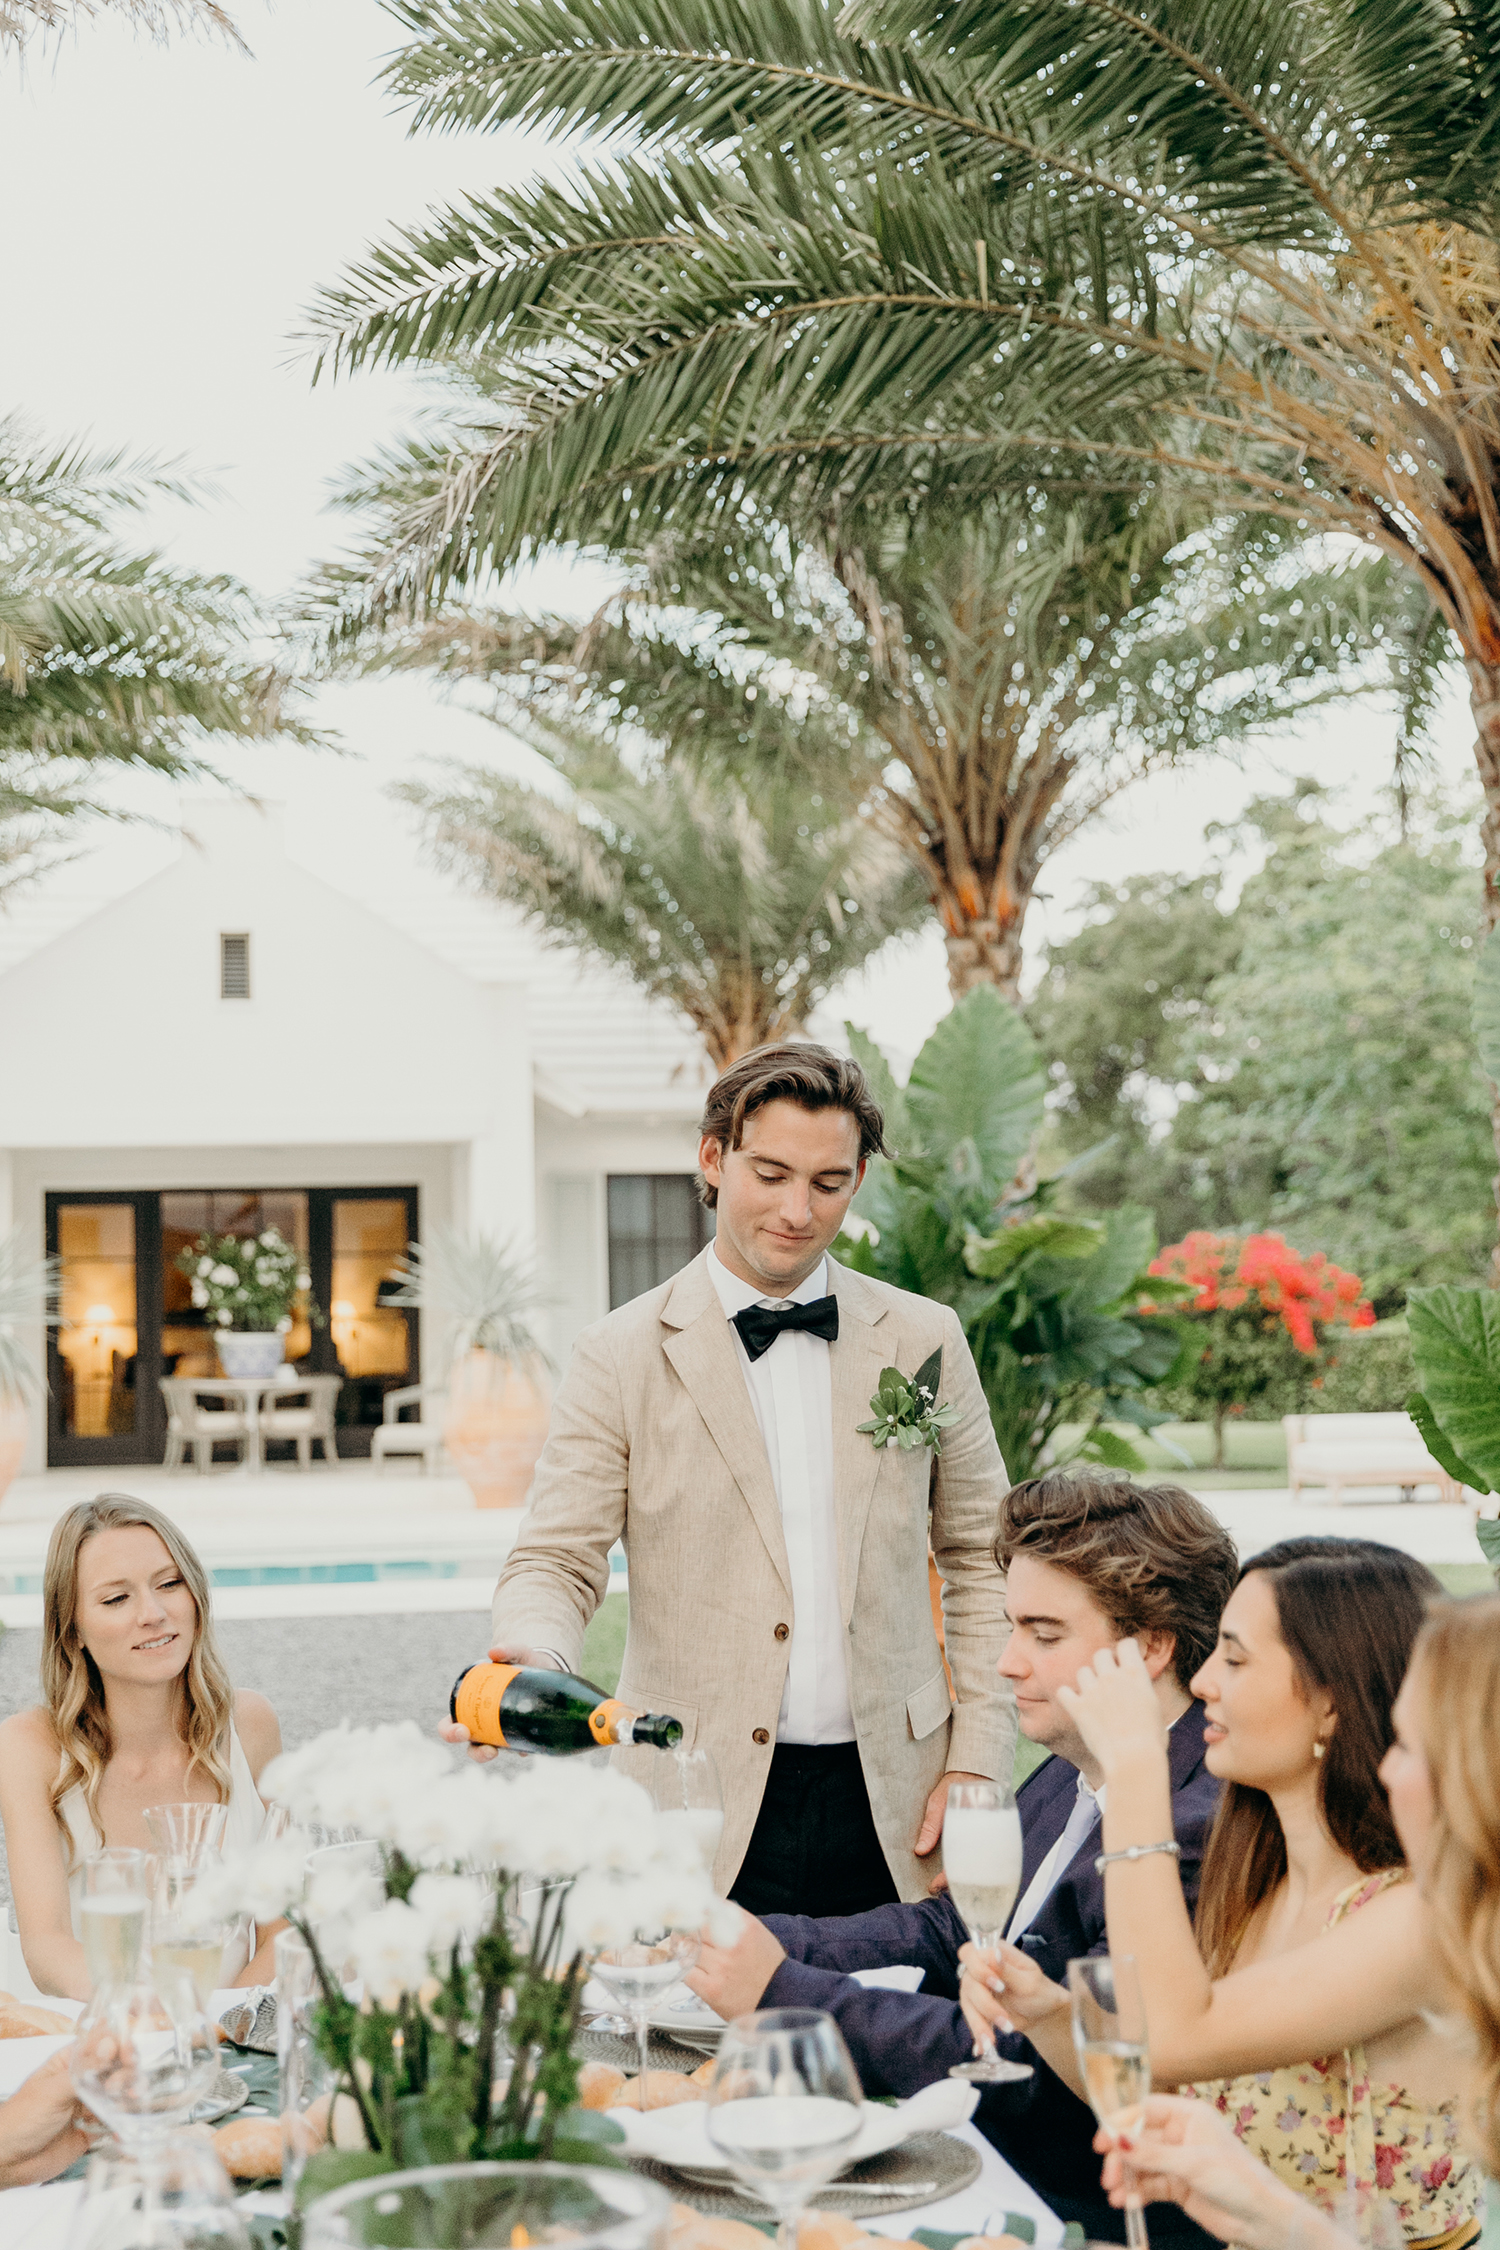 A Palm Beach Backyard Elopement | Something Blue Weddings